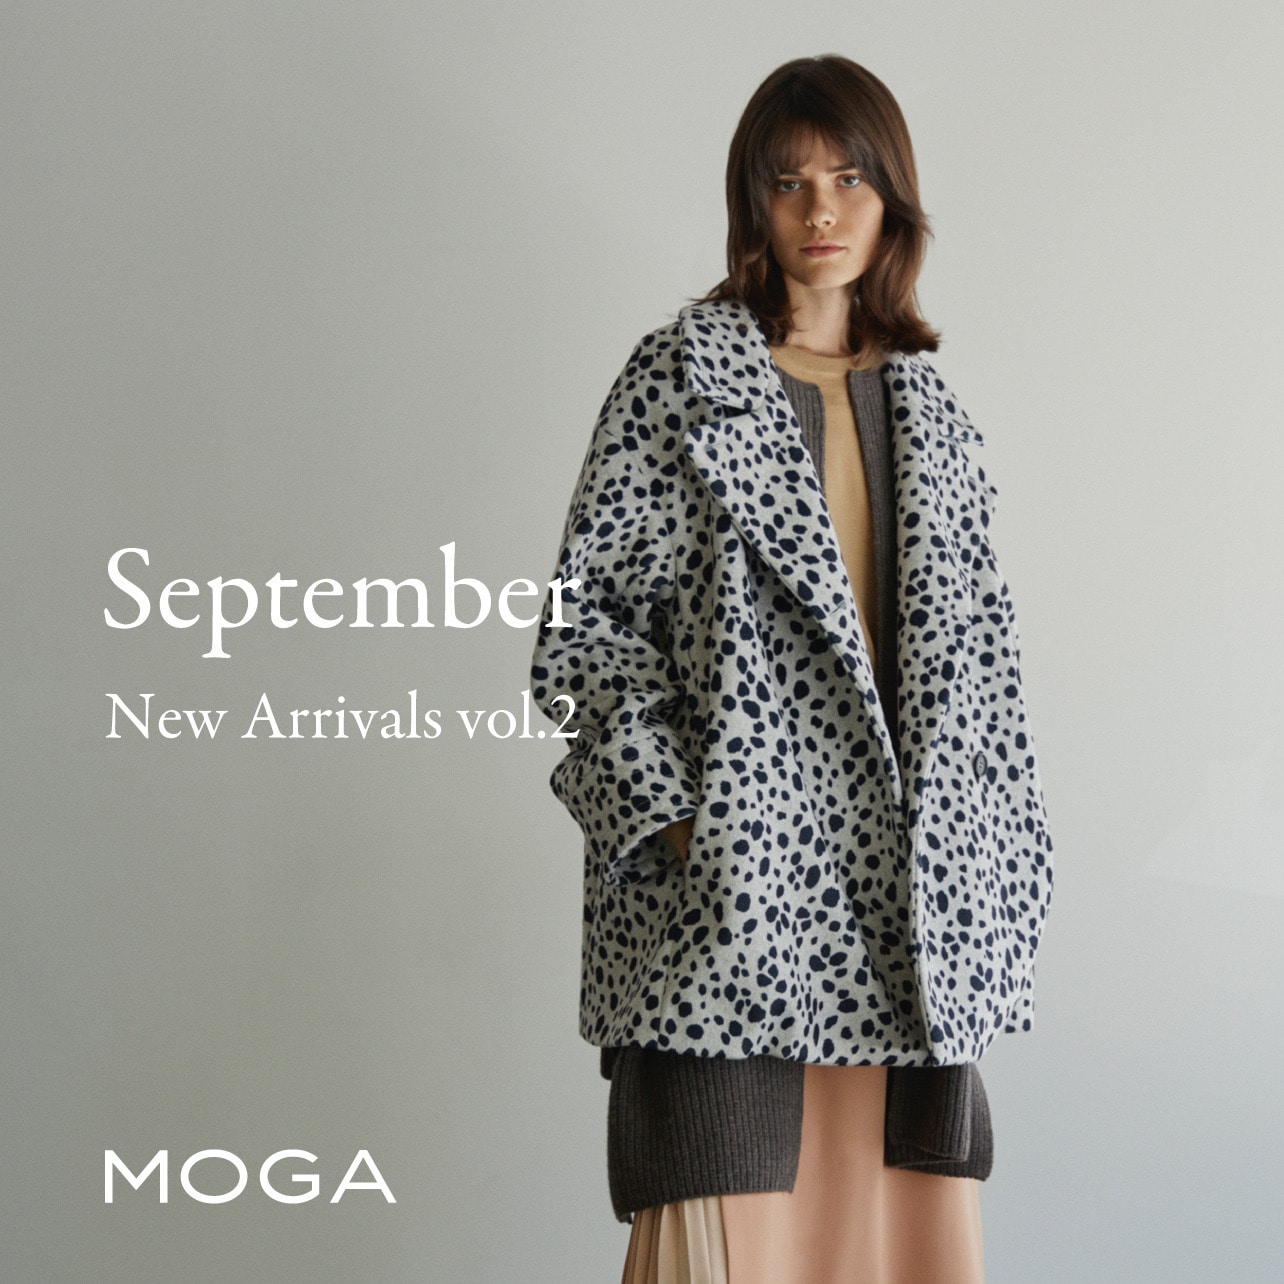 MOGA September New Arrivals vol.2